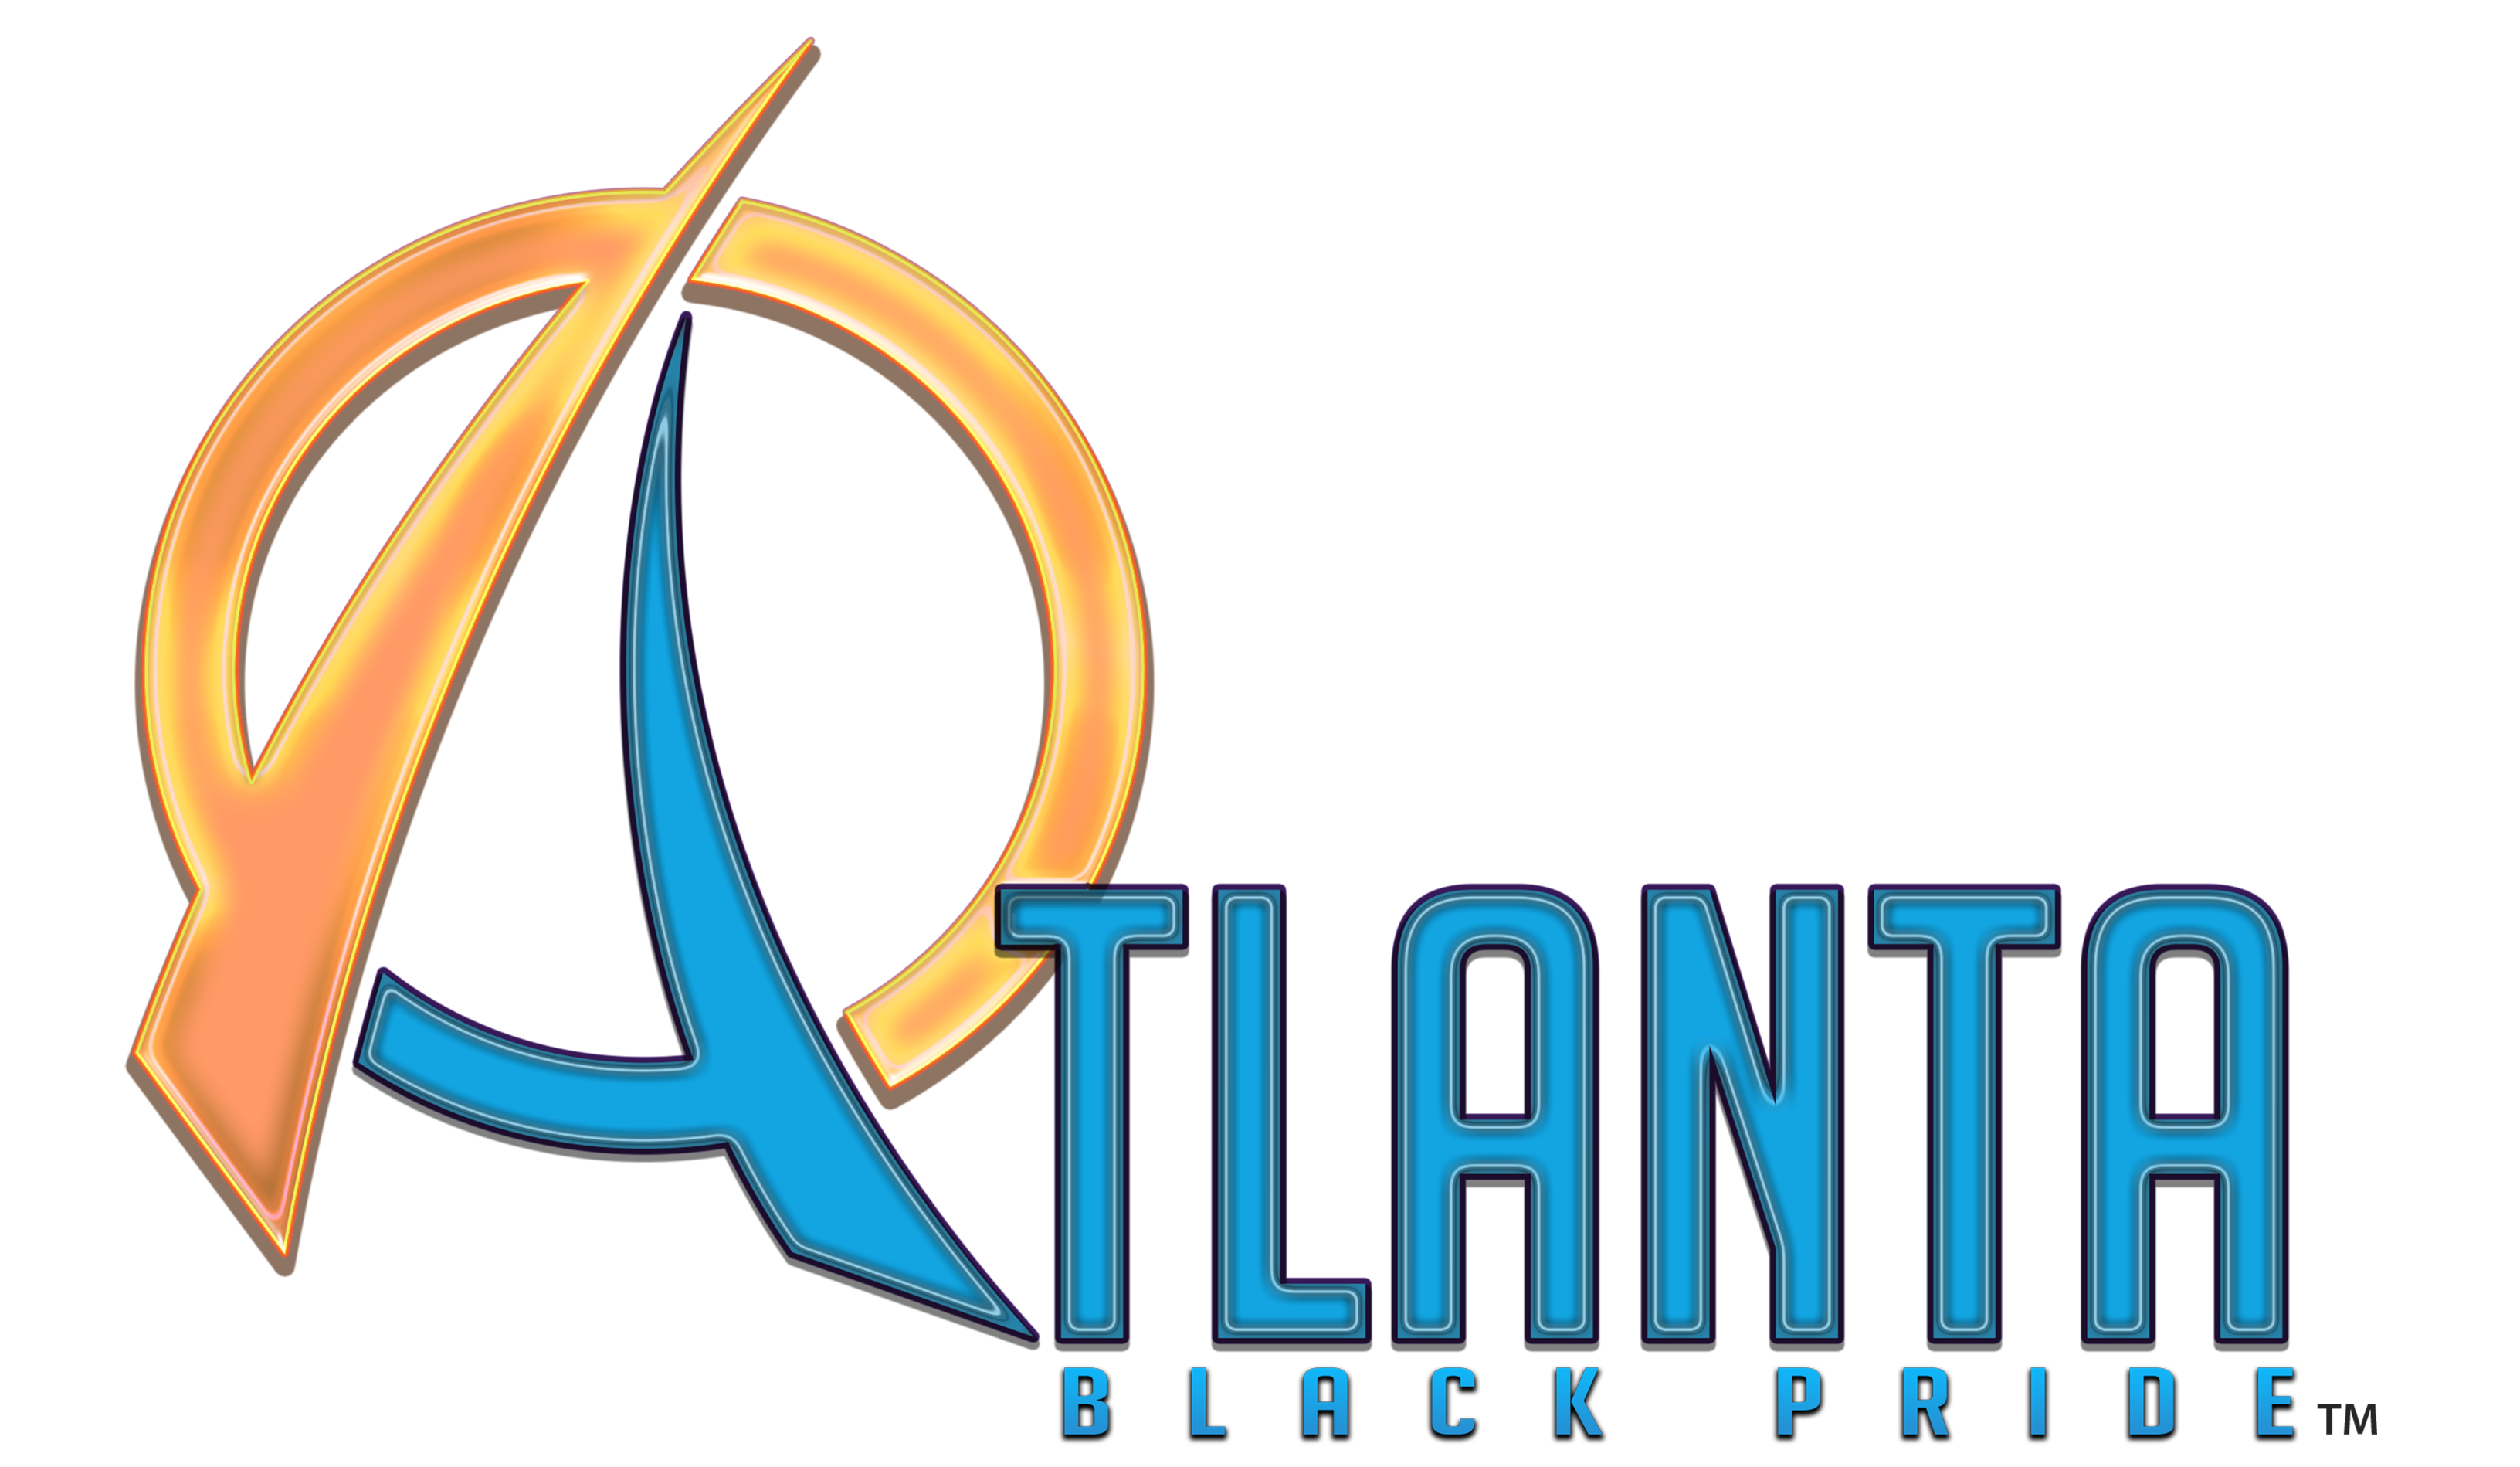 Atlanta Black Pride